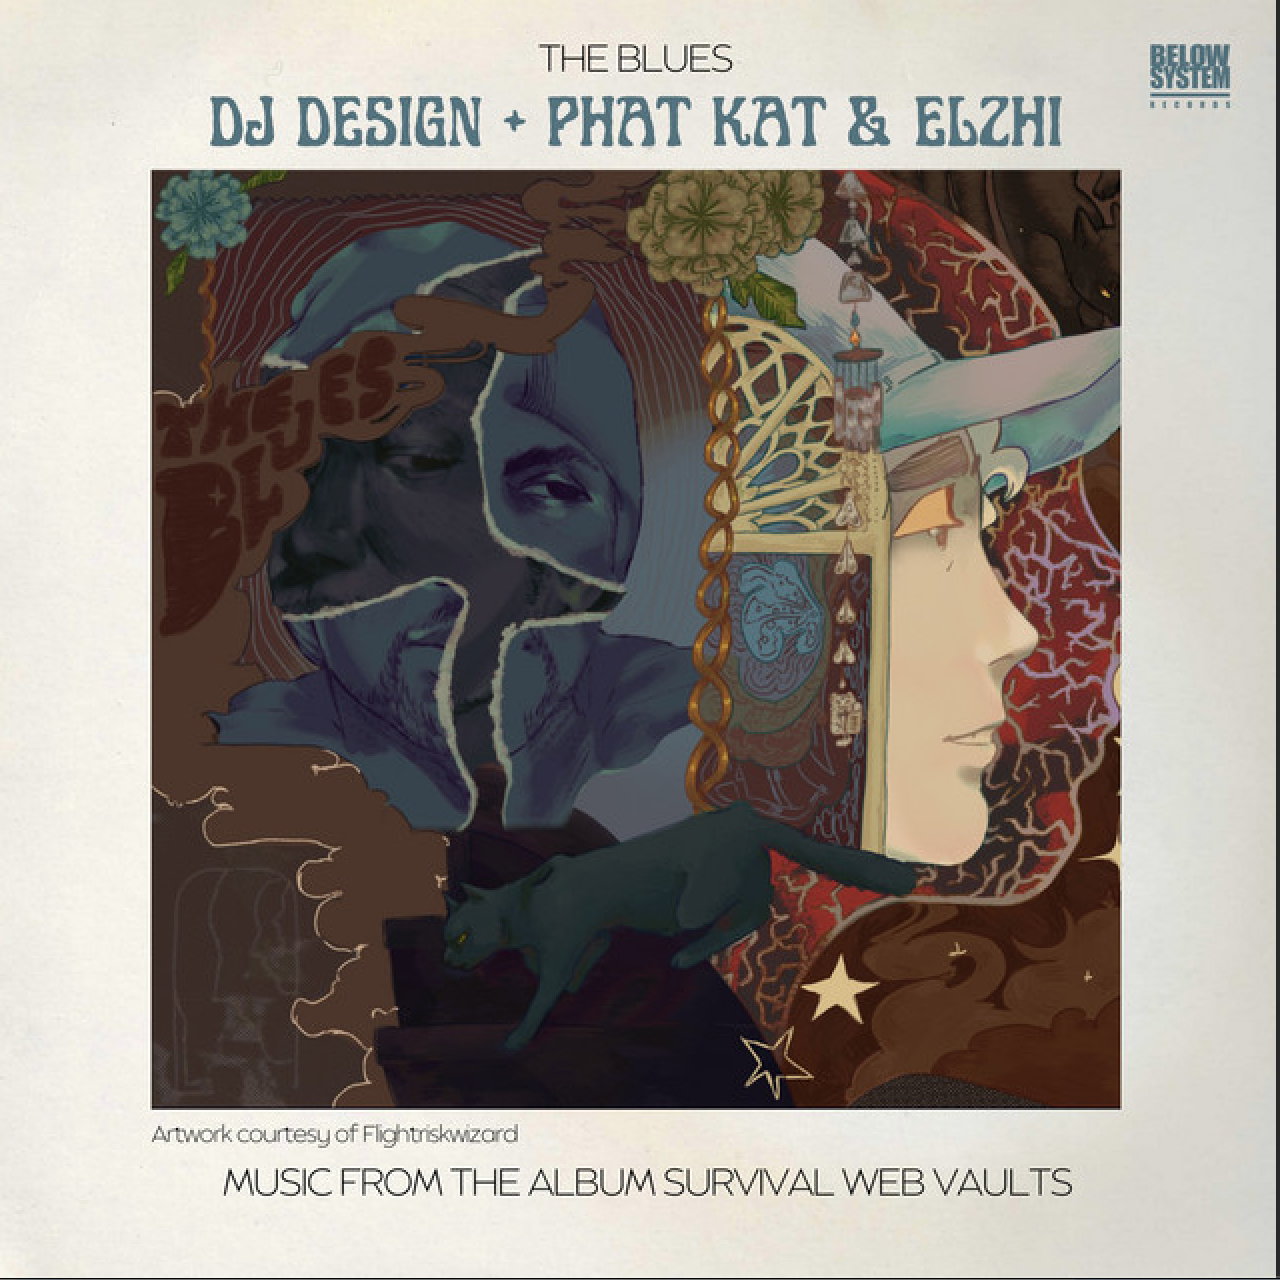 Early Stones Throw recording artist DJ Design teams up with Phat Kat & Elzhi from J Dillas vaunted Slum Village crew